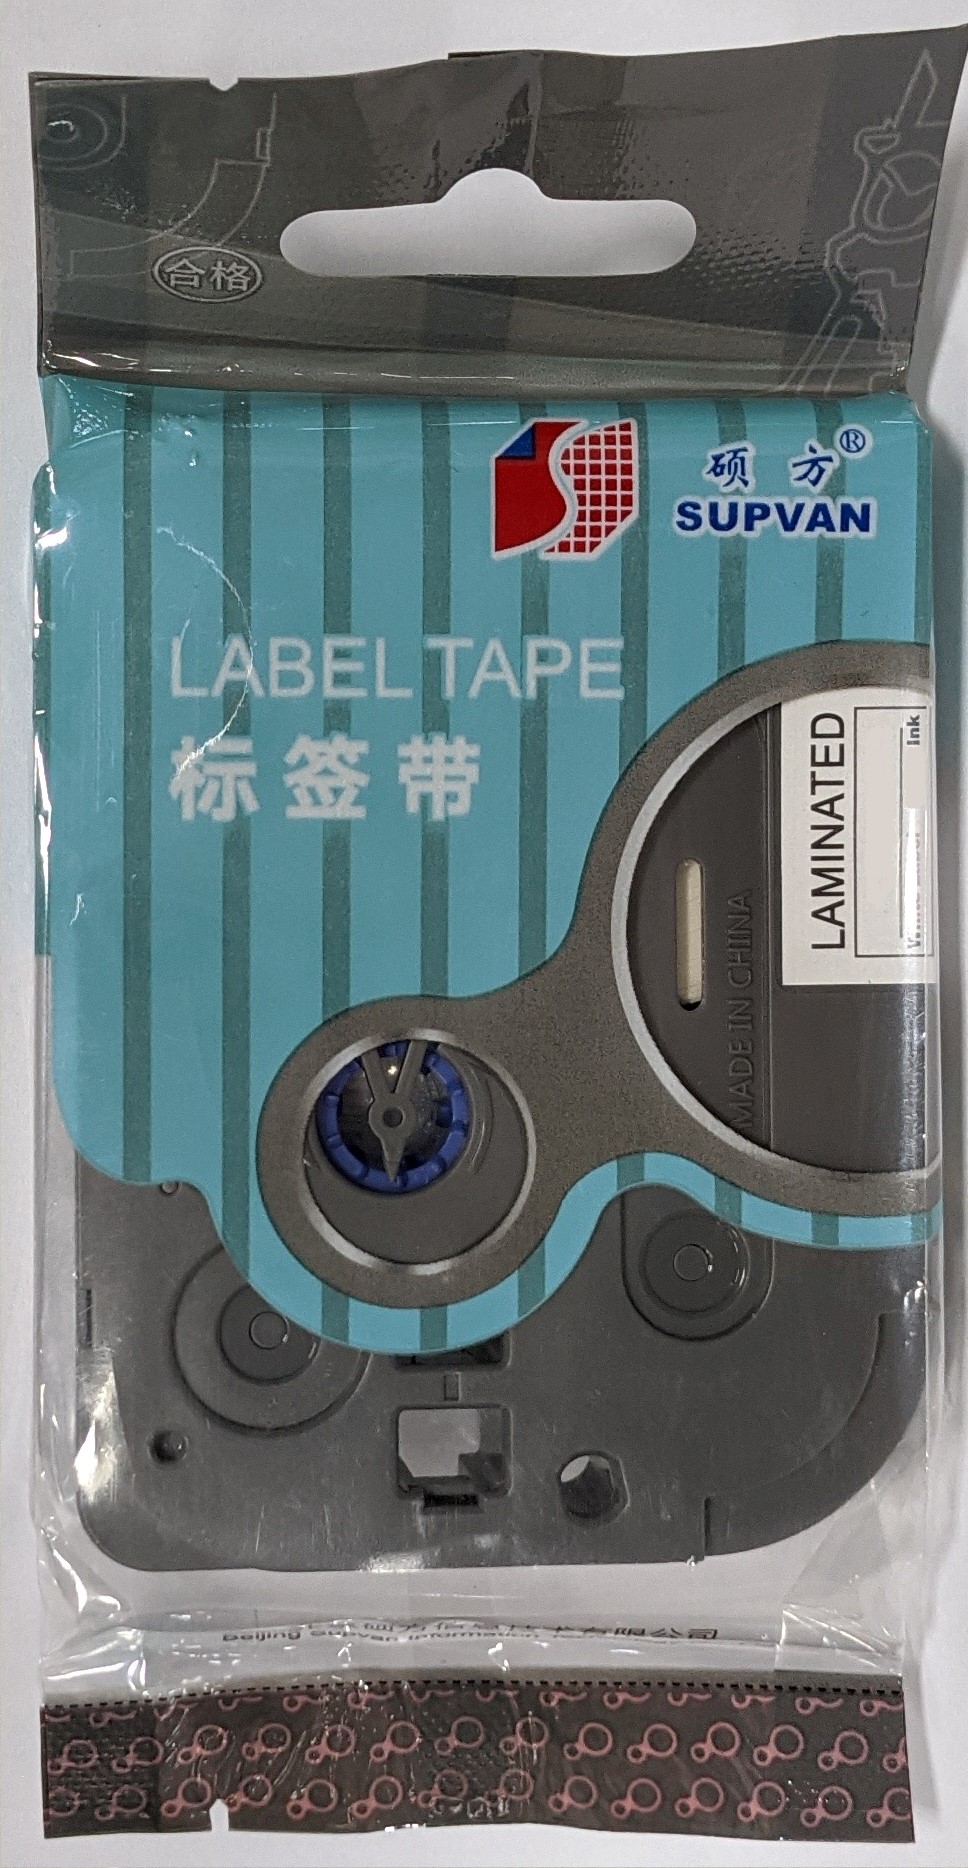 Samolepicí páska Supvan L-325E, 9mm x 8m, bílý tisk / černý podklad, laminovaná